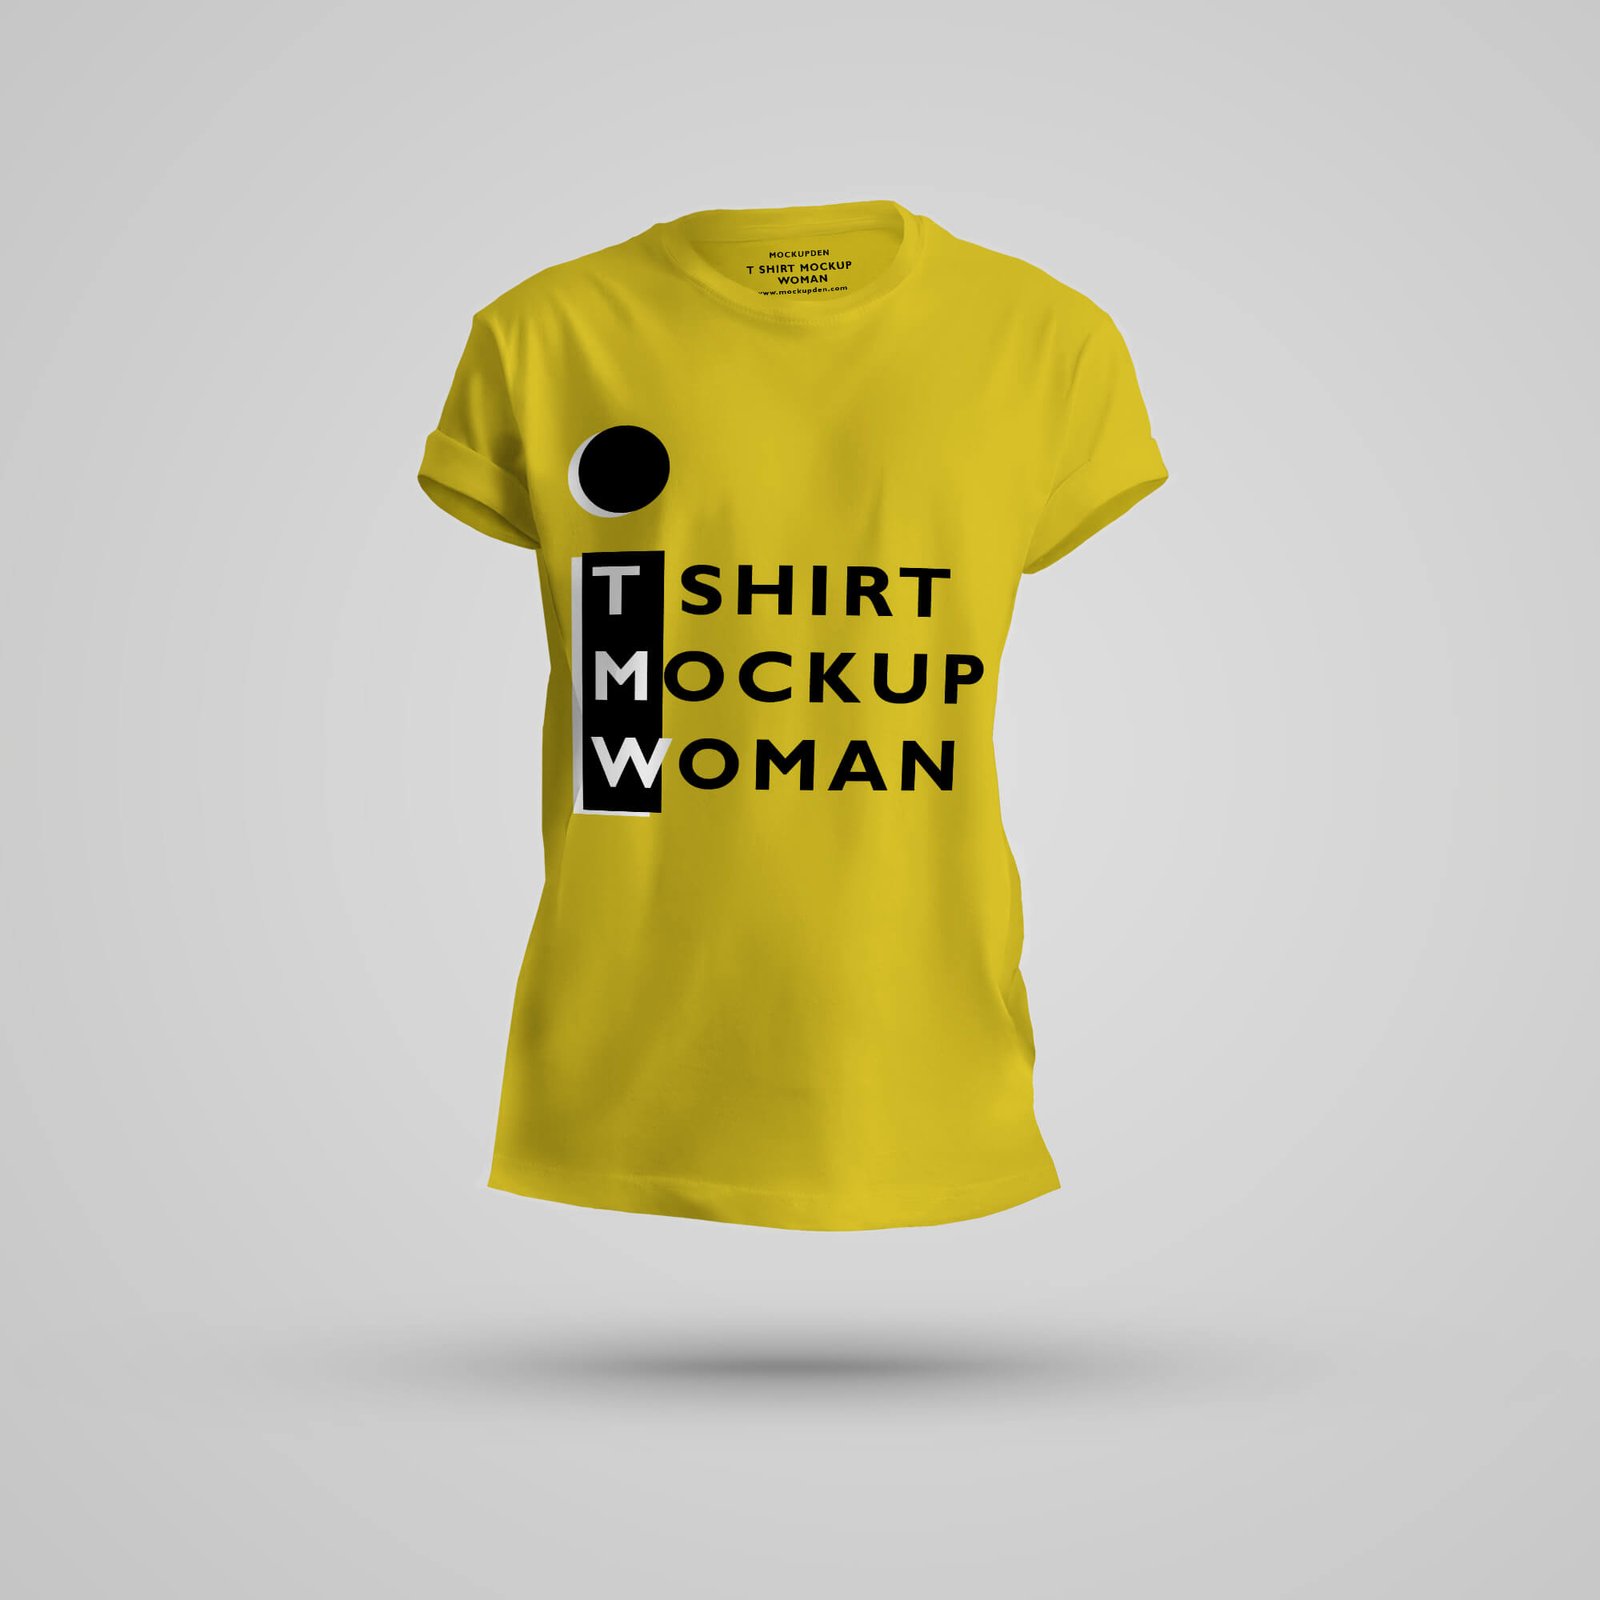 Free T Shirt Mockup Women PSD Template - Mockup Den